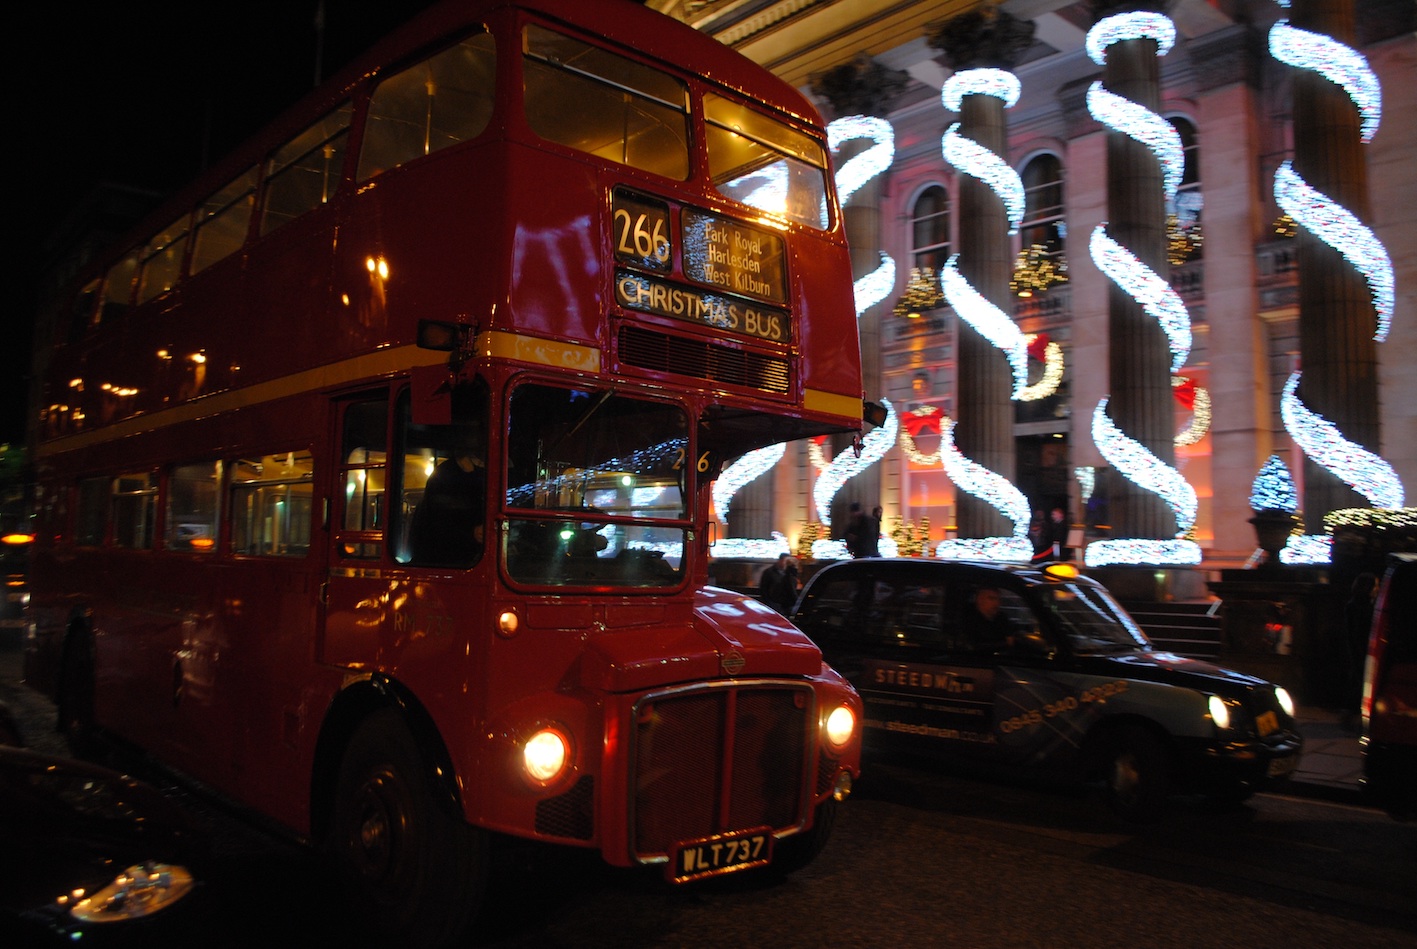 Christmas bus Edinburgh.jpg